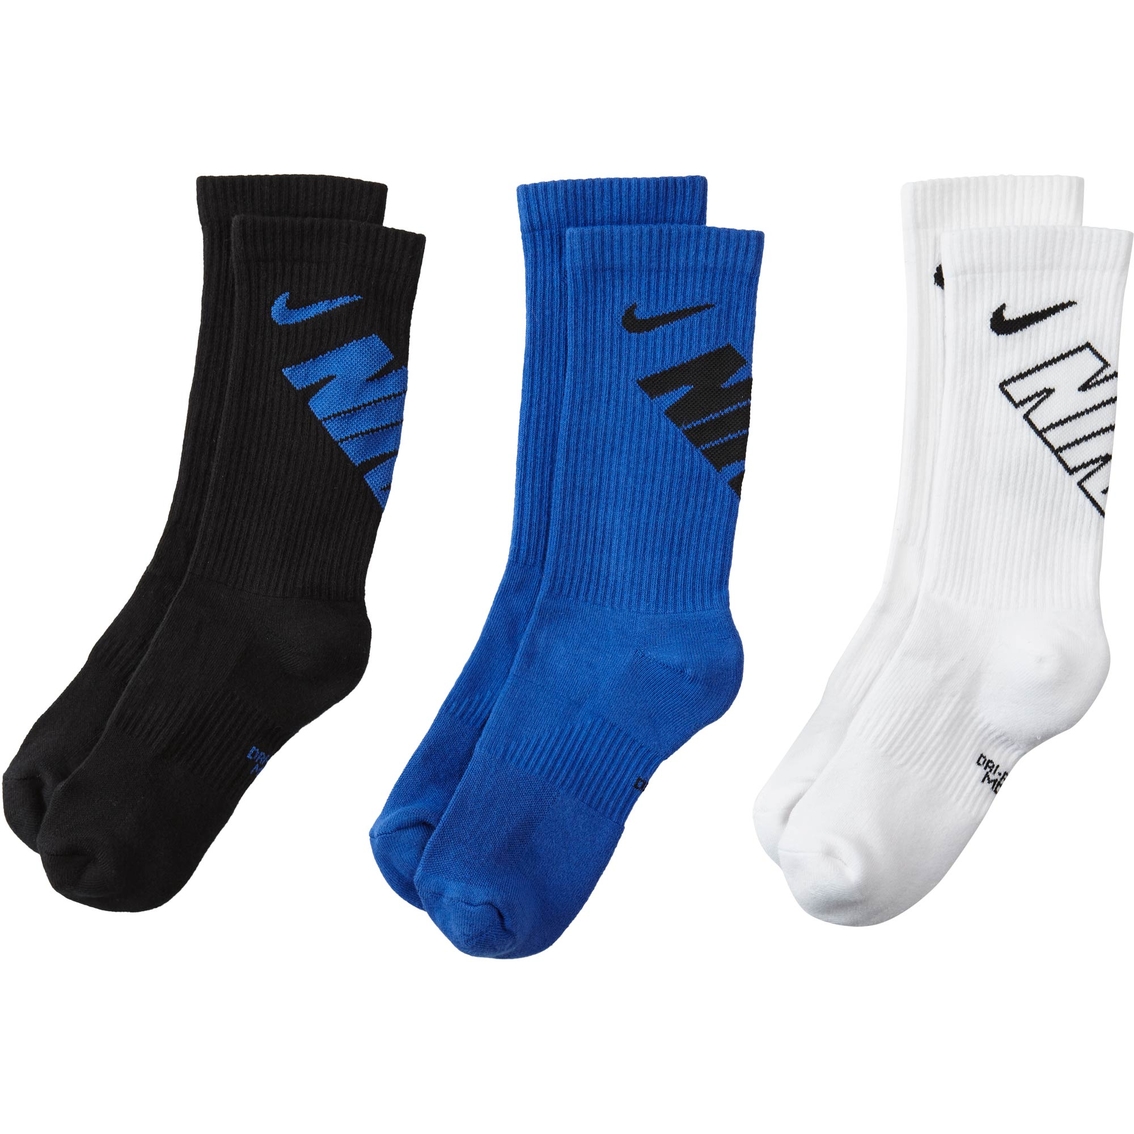 Nike Youth Performance Crew Socks 3 Pk. | Boys 8-20 | Clothing ...